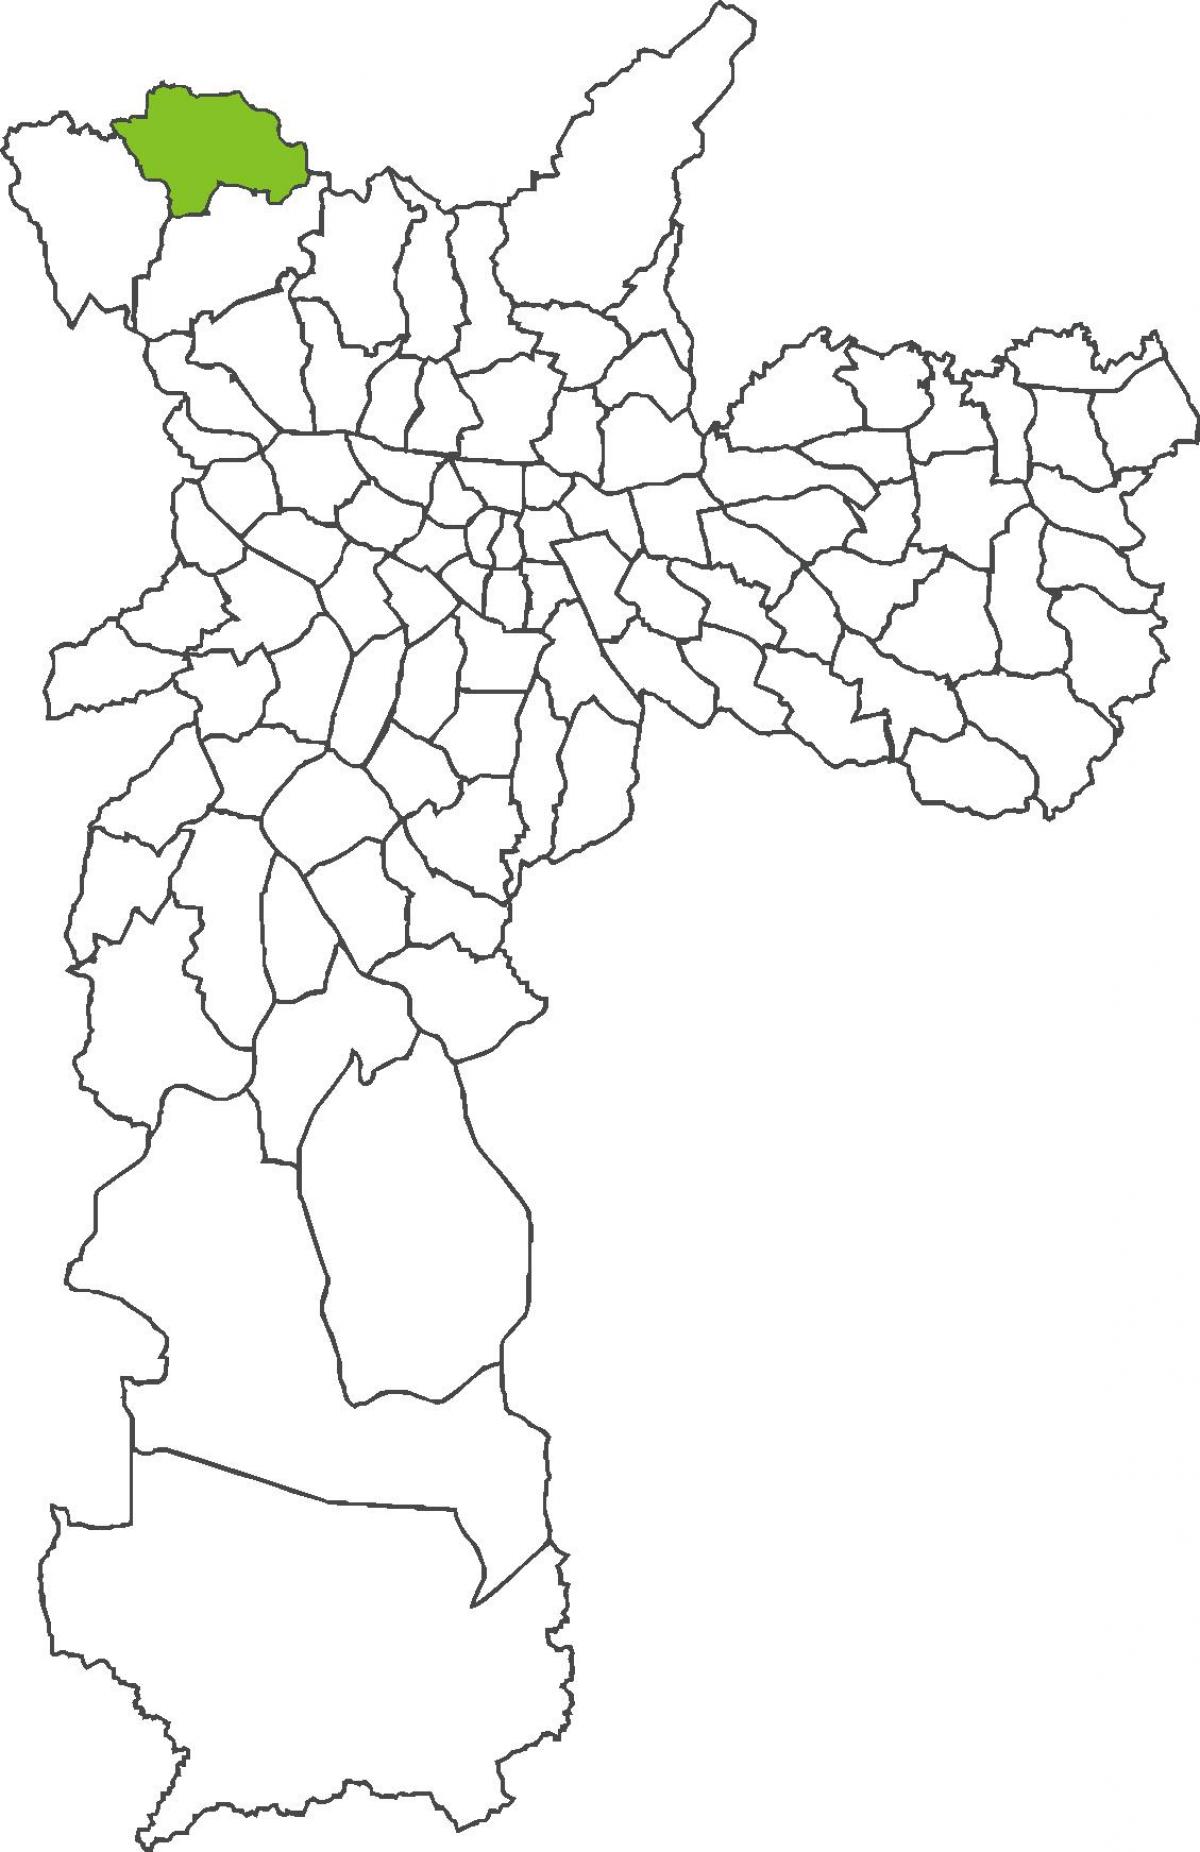 Mapa de Perus provincia